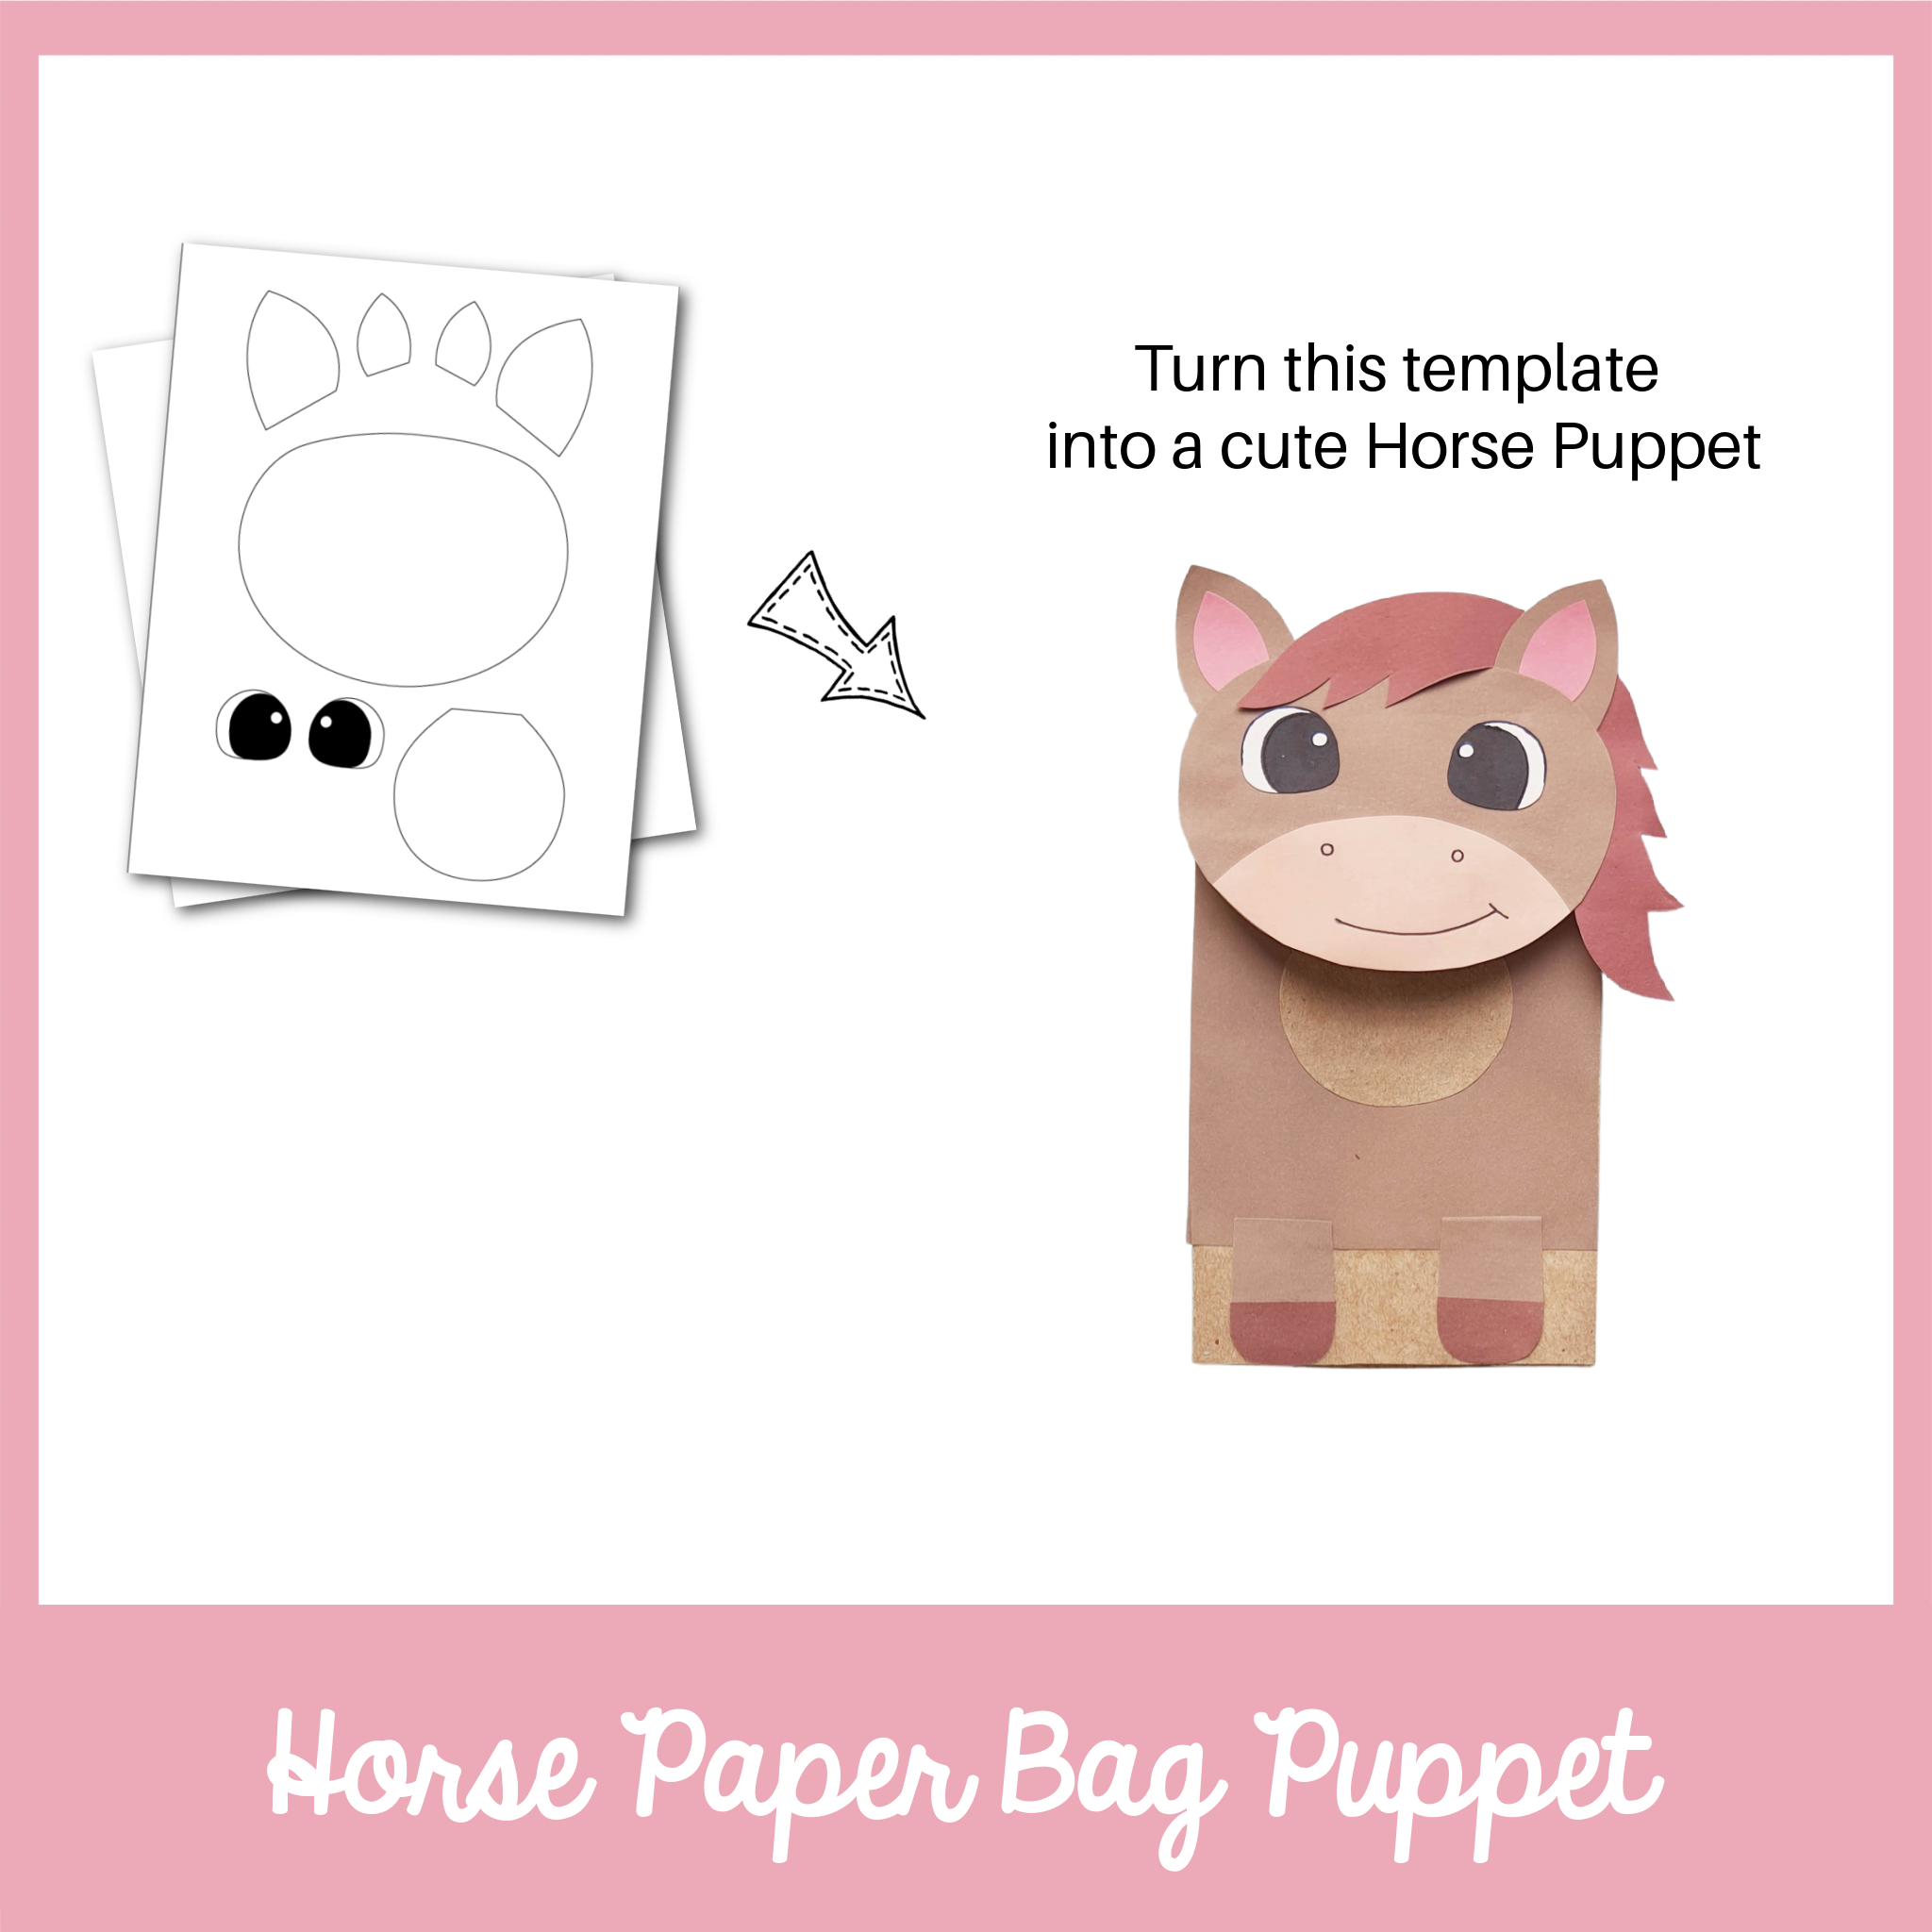 paper bag puppet dragon